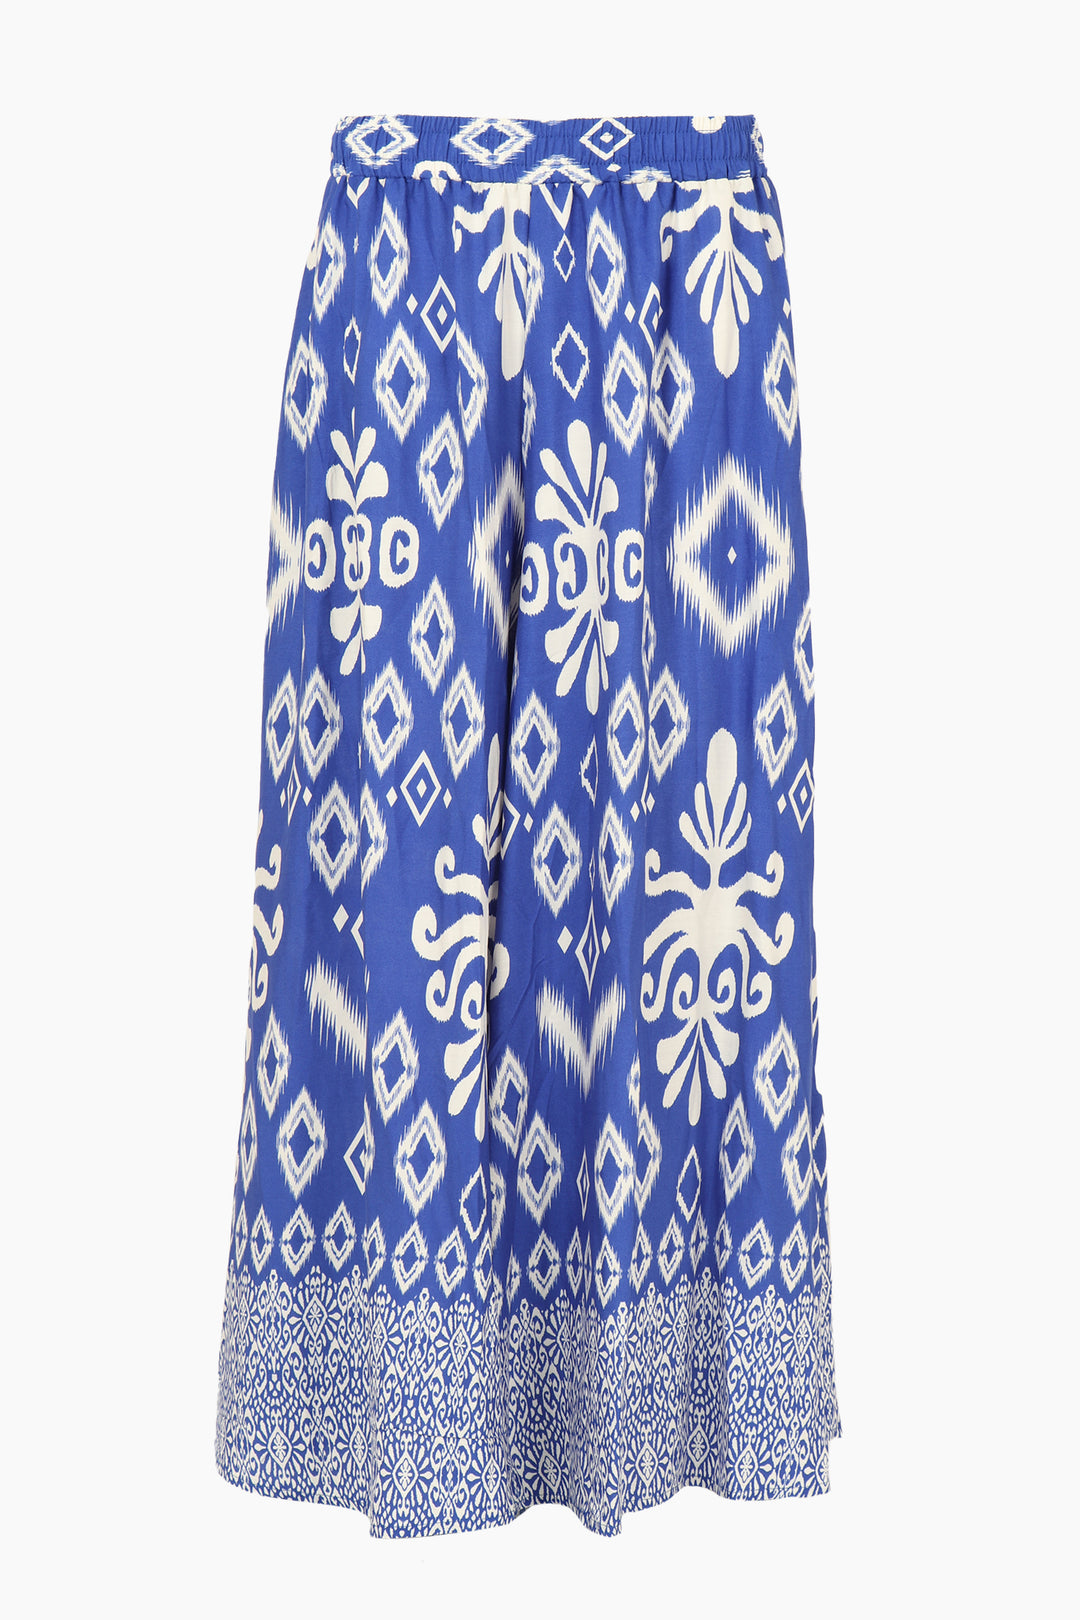 blue and white ikat pattern summer palazzo trousers